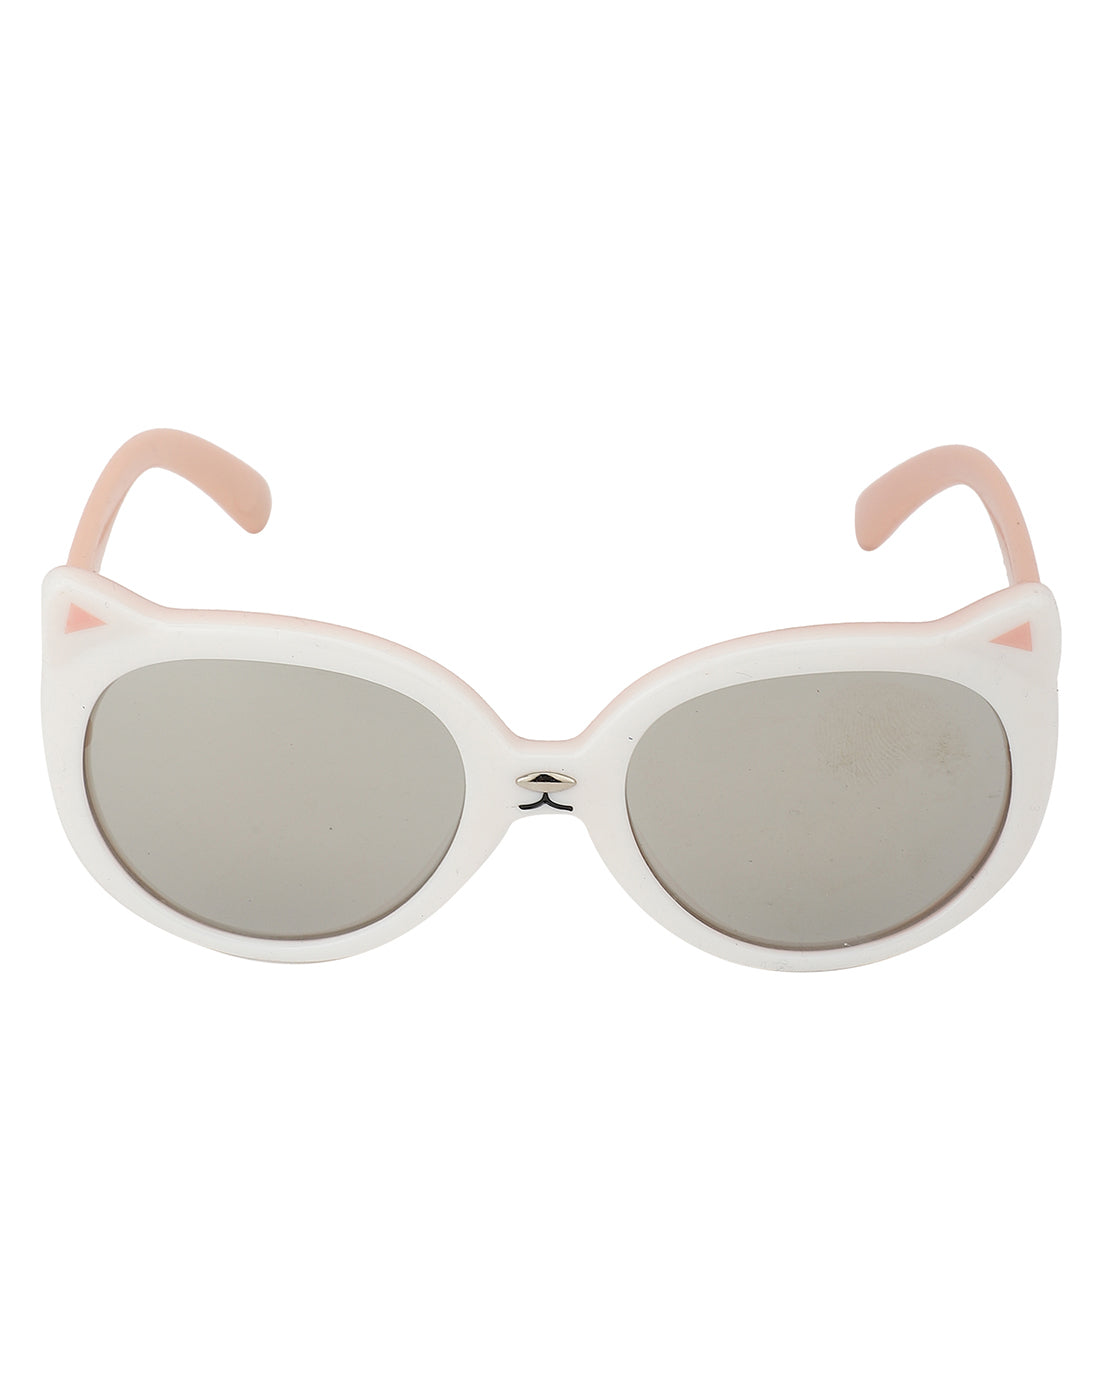 Buy White Walker Black Sunglasses for Women Online at Eyewearlabs